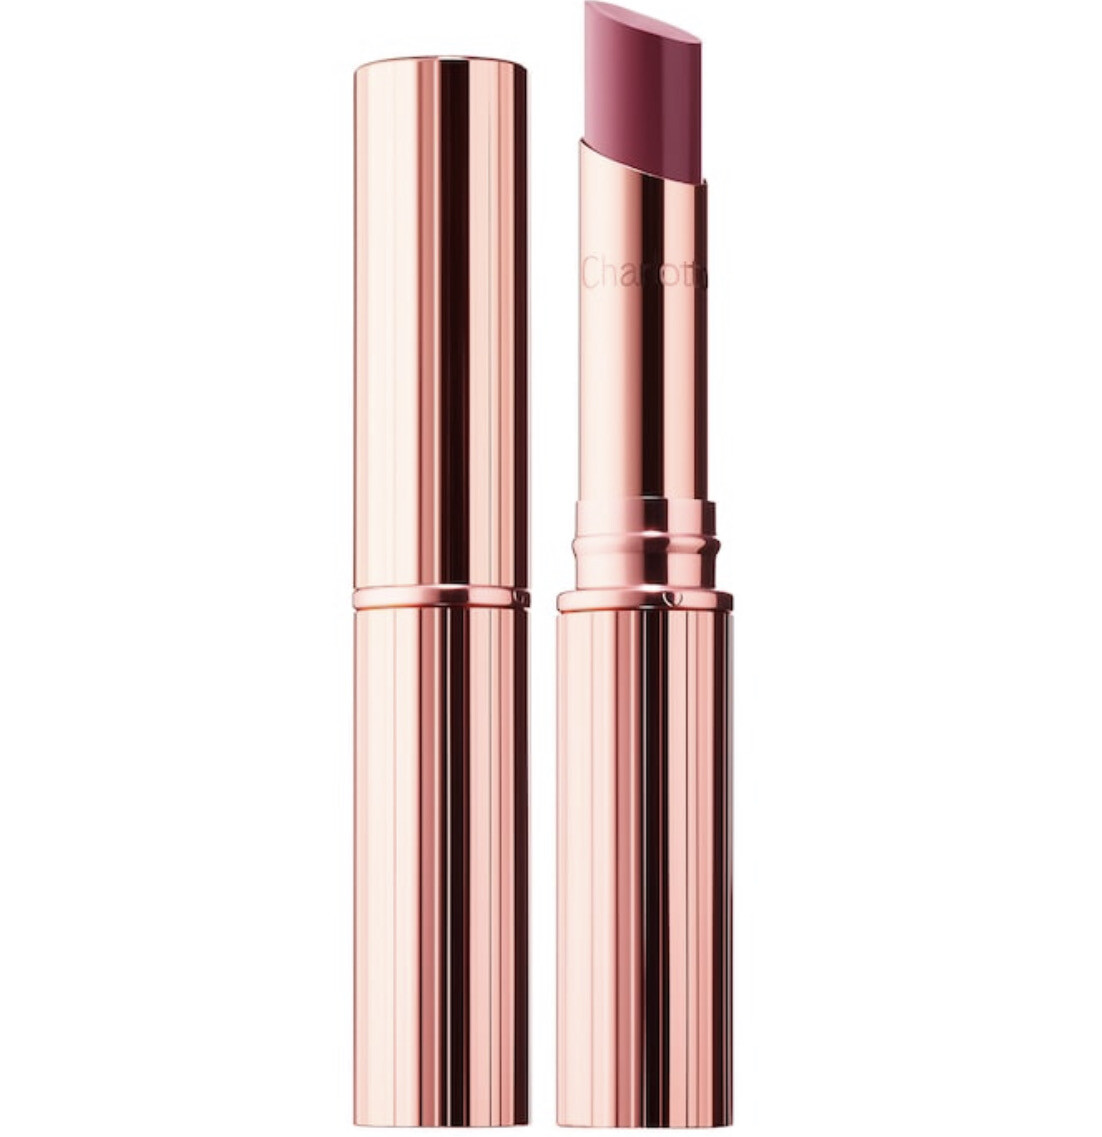 Charlotte Tilbury - Superstar Lips Lipstick | Pillow Talk - nude pink